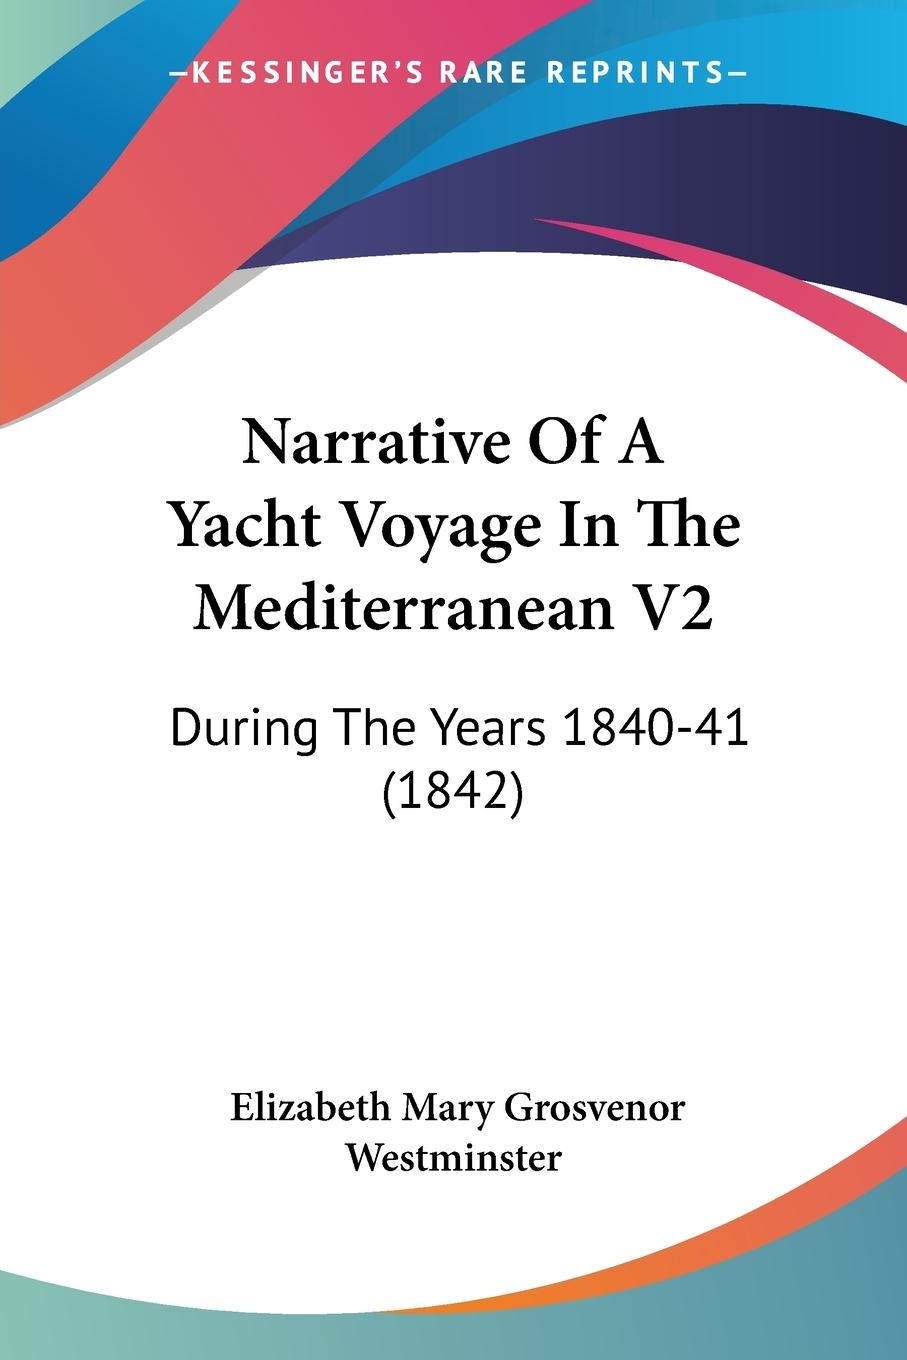 Narrative Of A Yacht Voyage In The Mediterranean V2 - Westminster, Elizabeth Mary Grosvenor